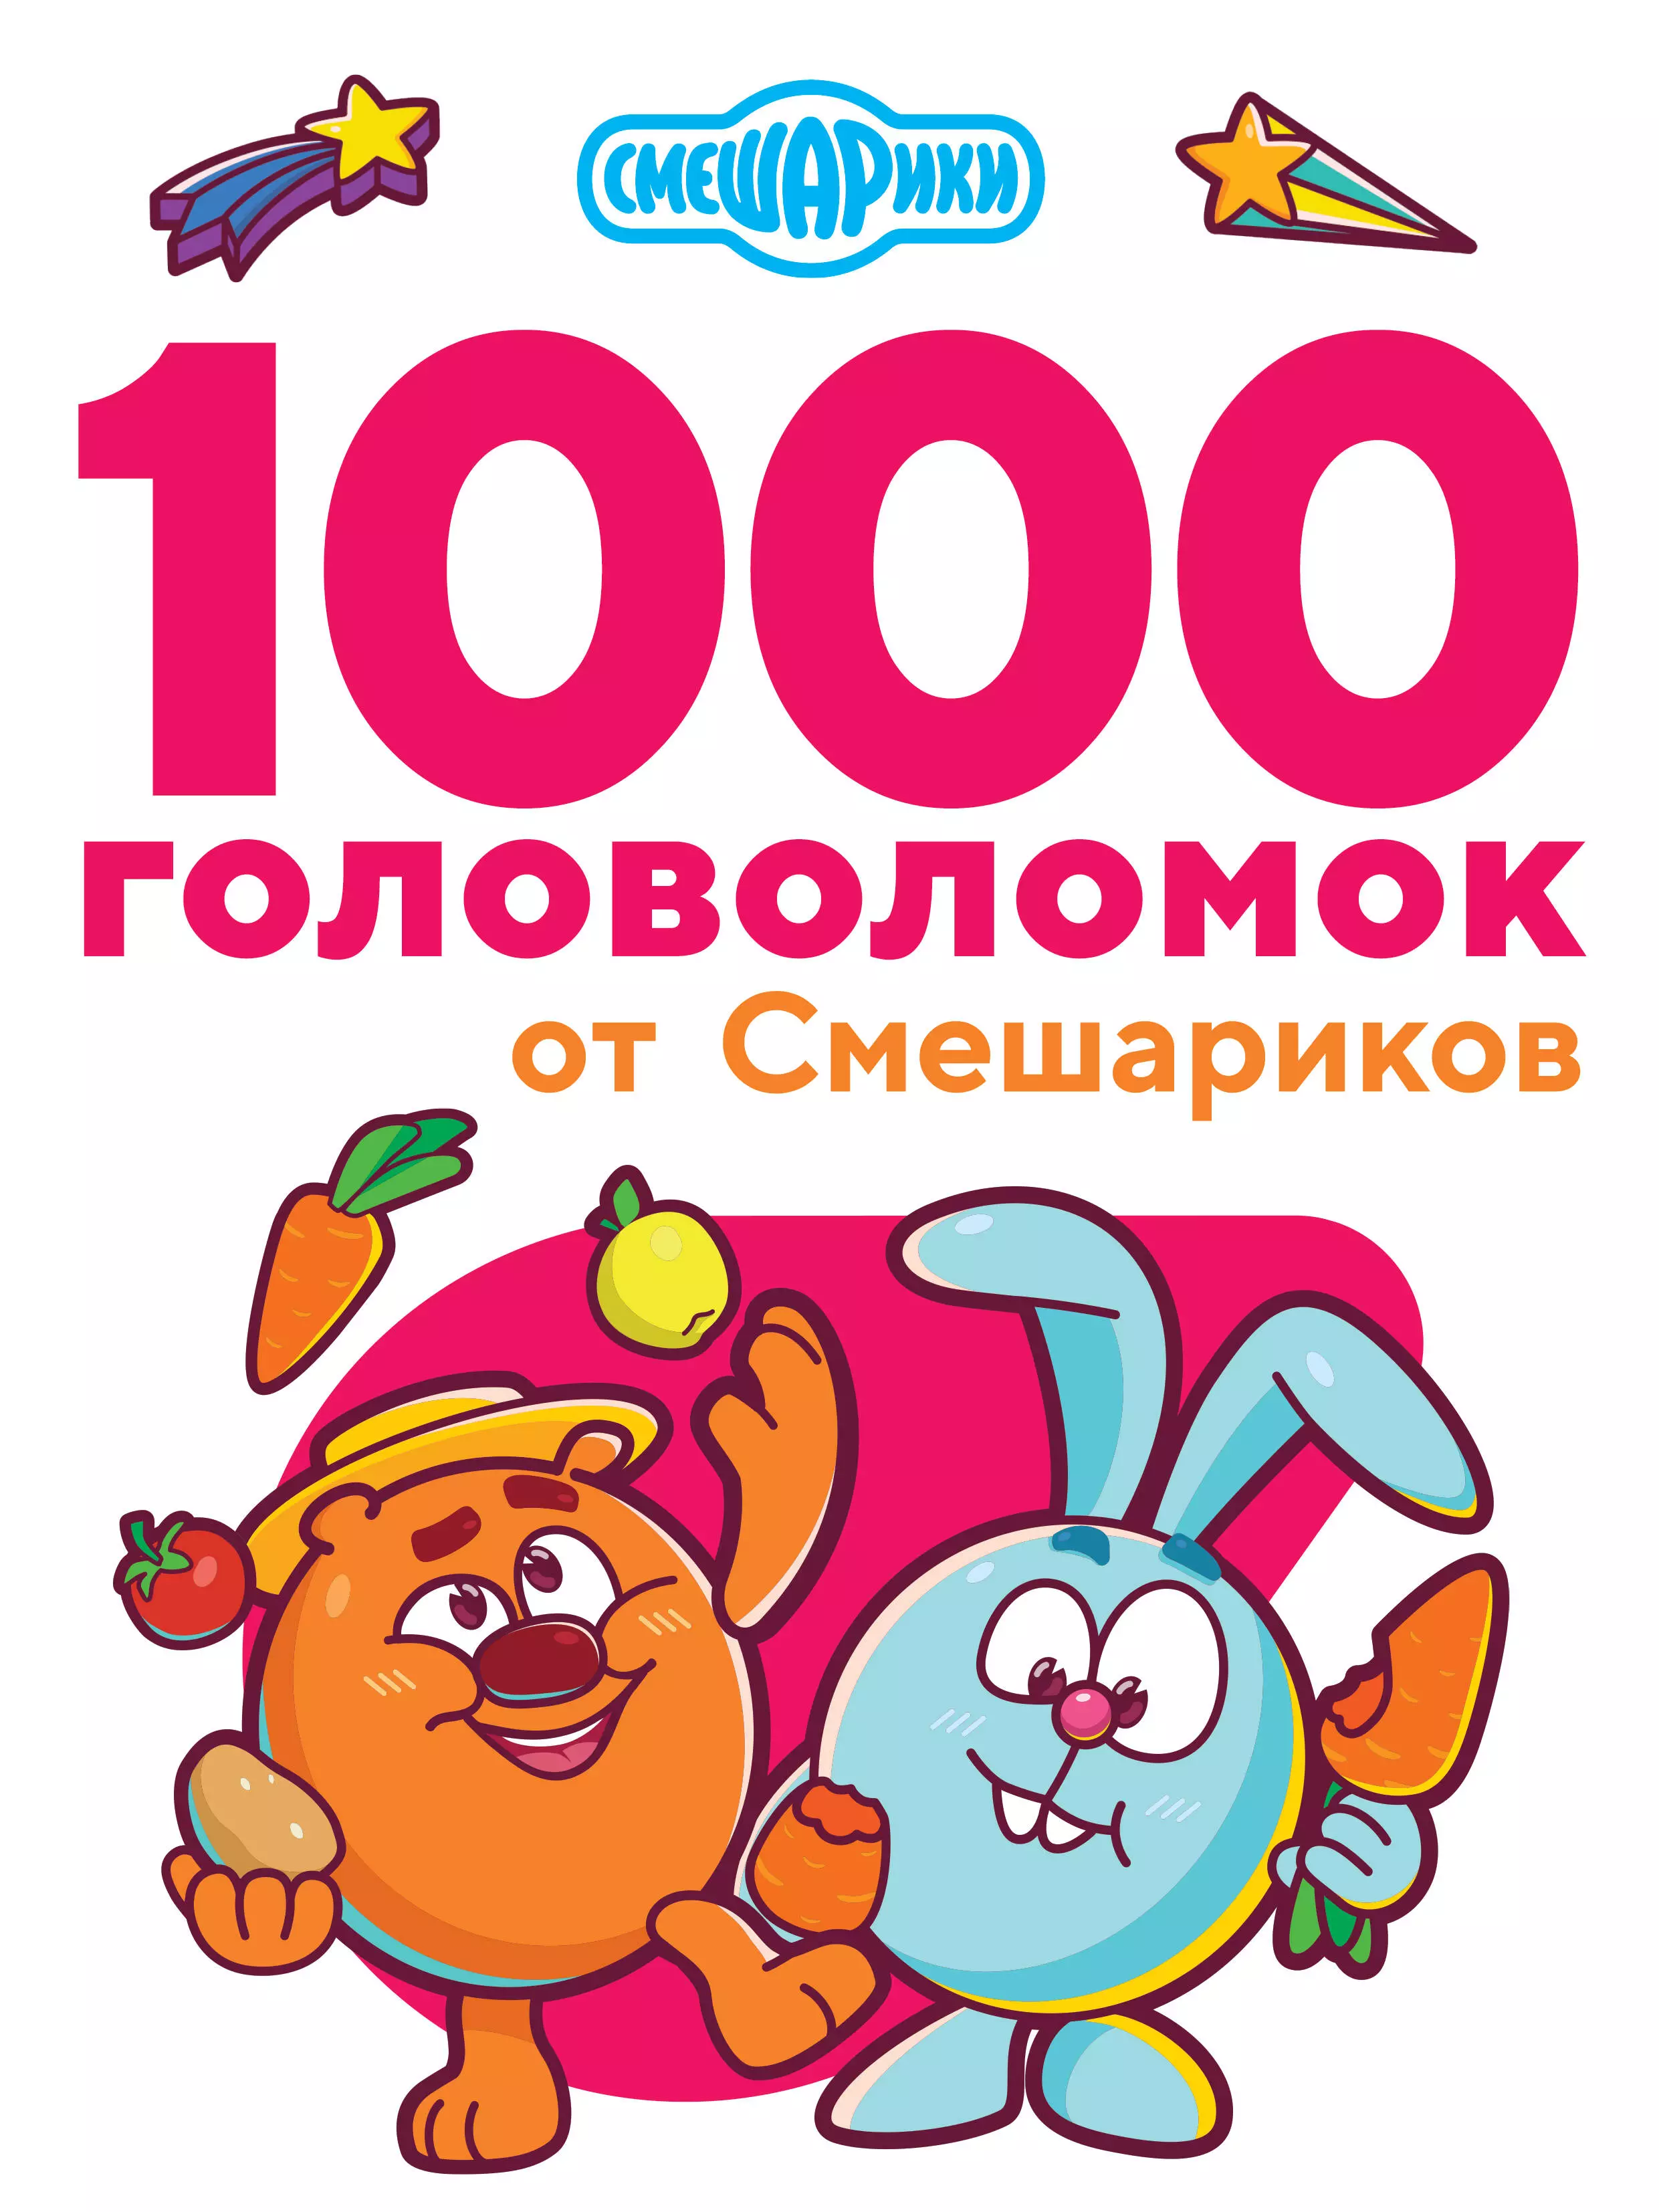 1000 головоломок от Смешариков лосяш